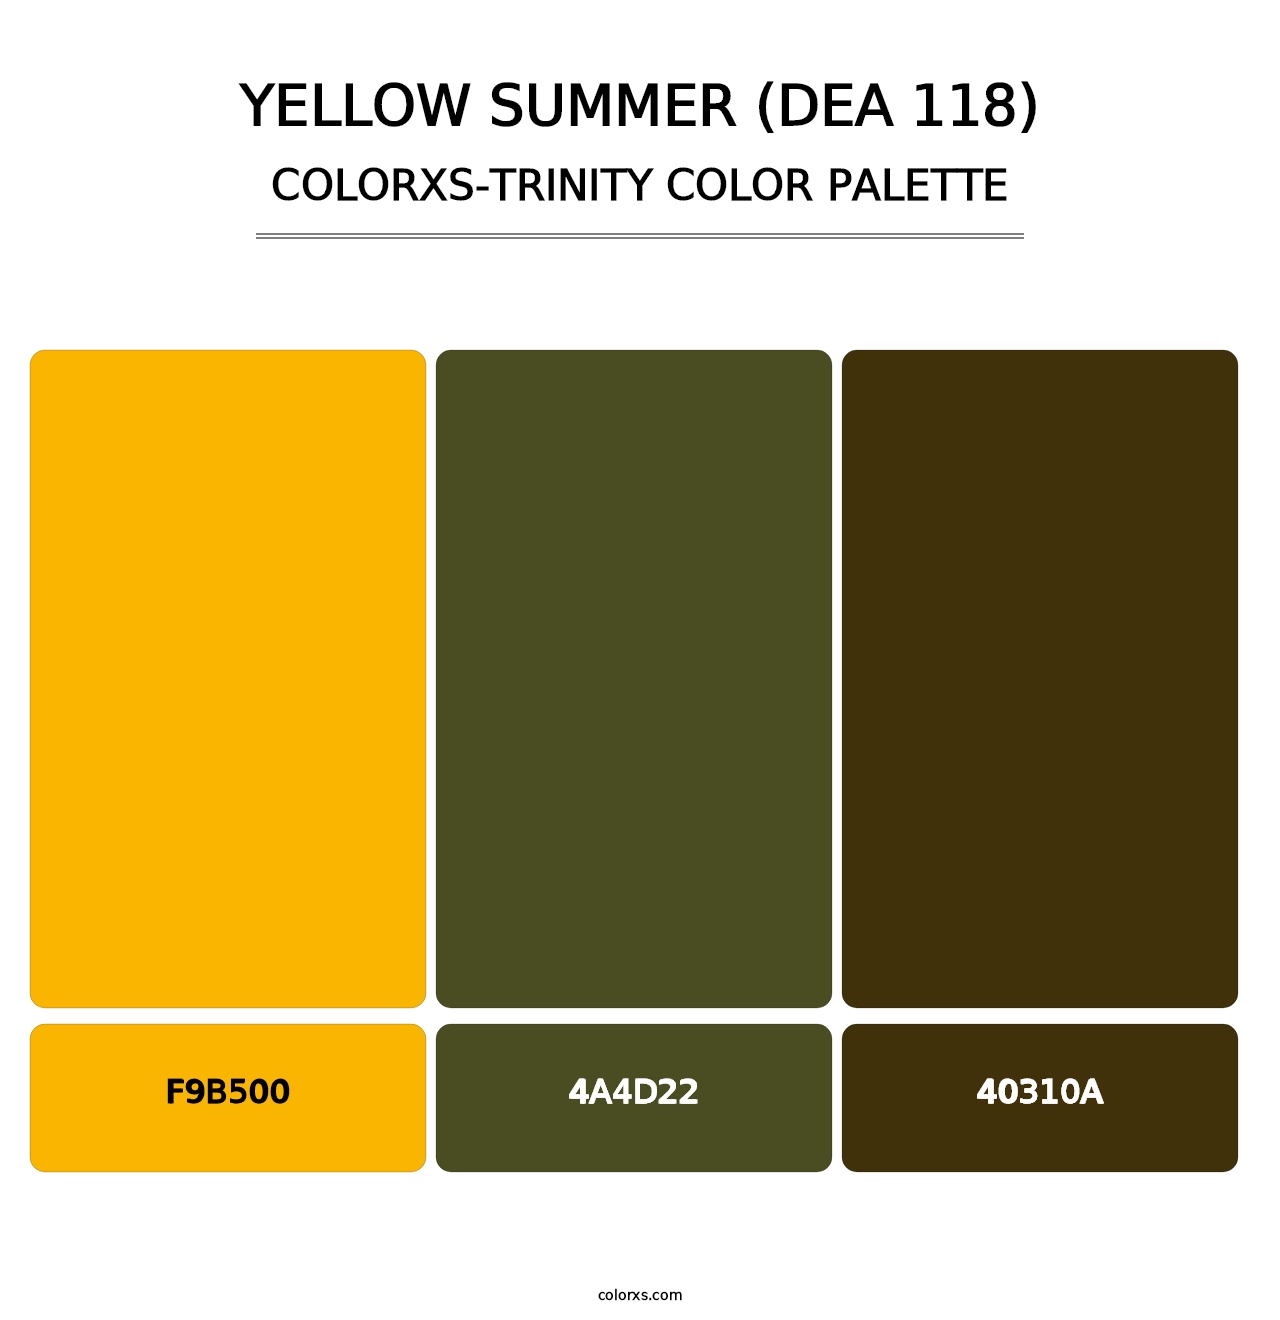 Yellow Summer (DEA 118) - Colorxs Trinity Palette